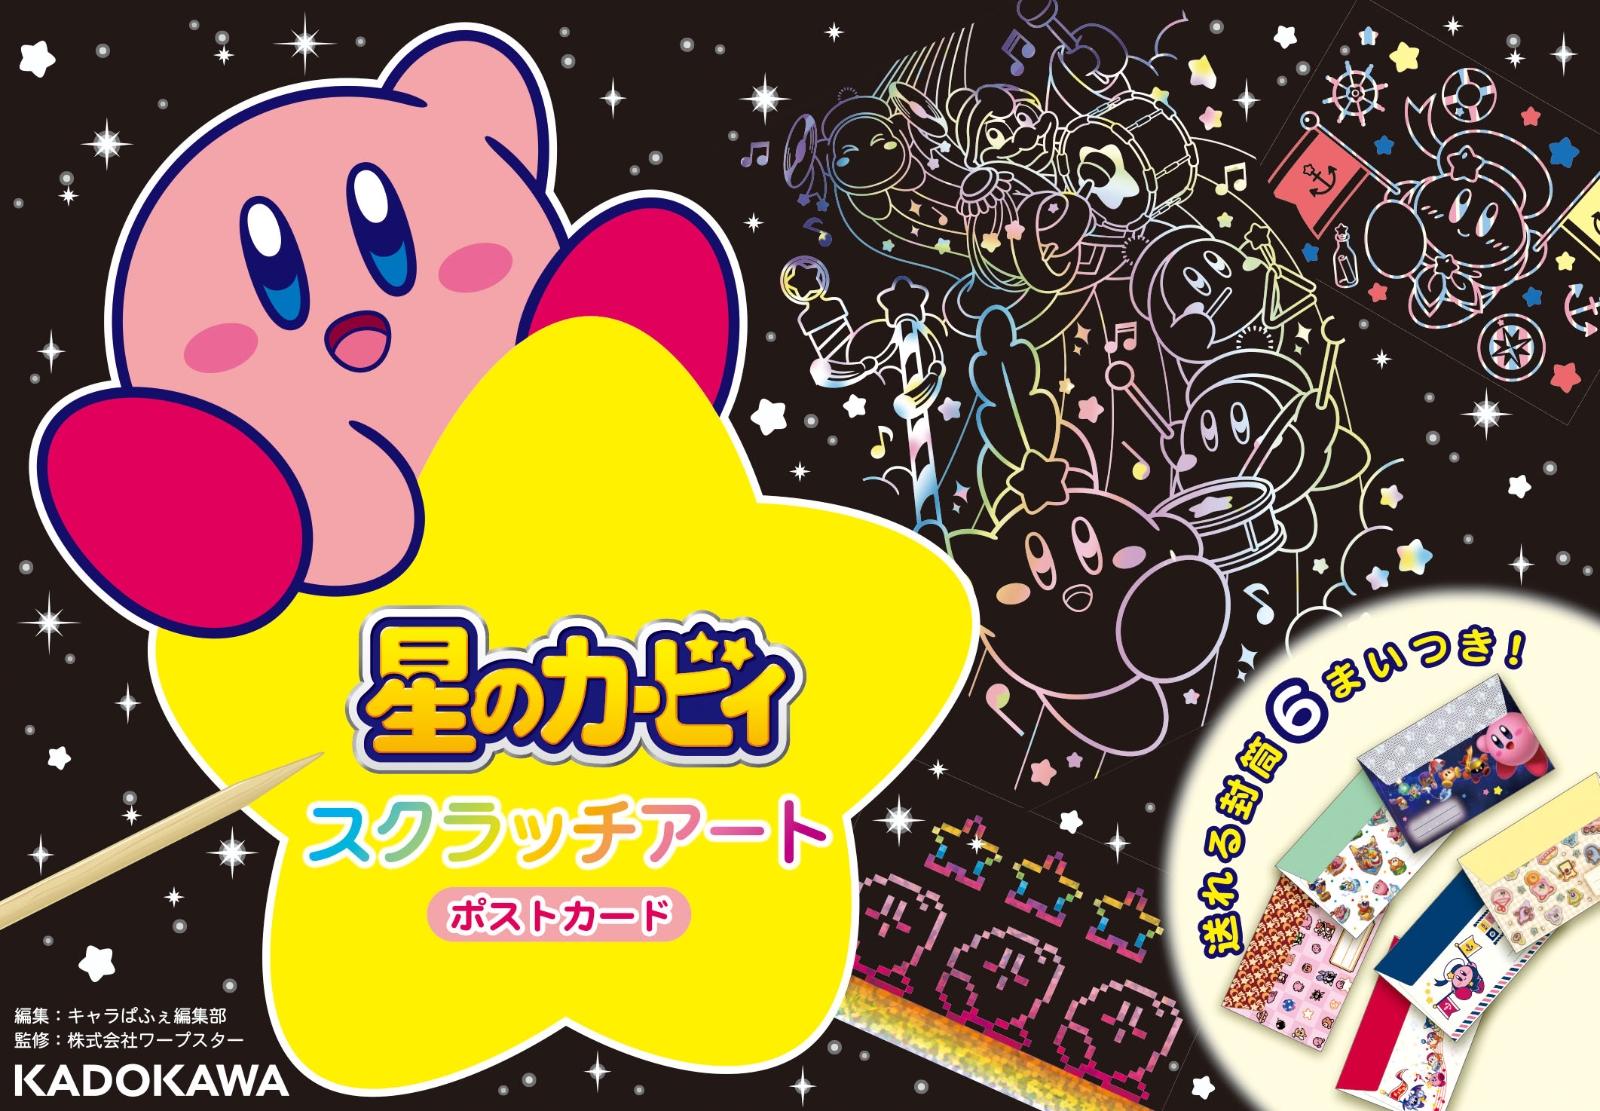 Kadokawaから 星のカービィ スクラッチアート ポストカード が19年3月日に発売決定 Nintendo Switch 情報ブログ 非公式